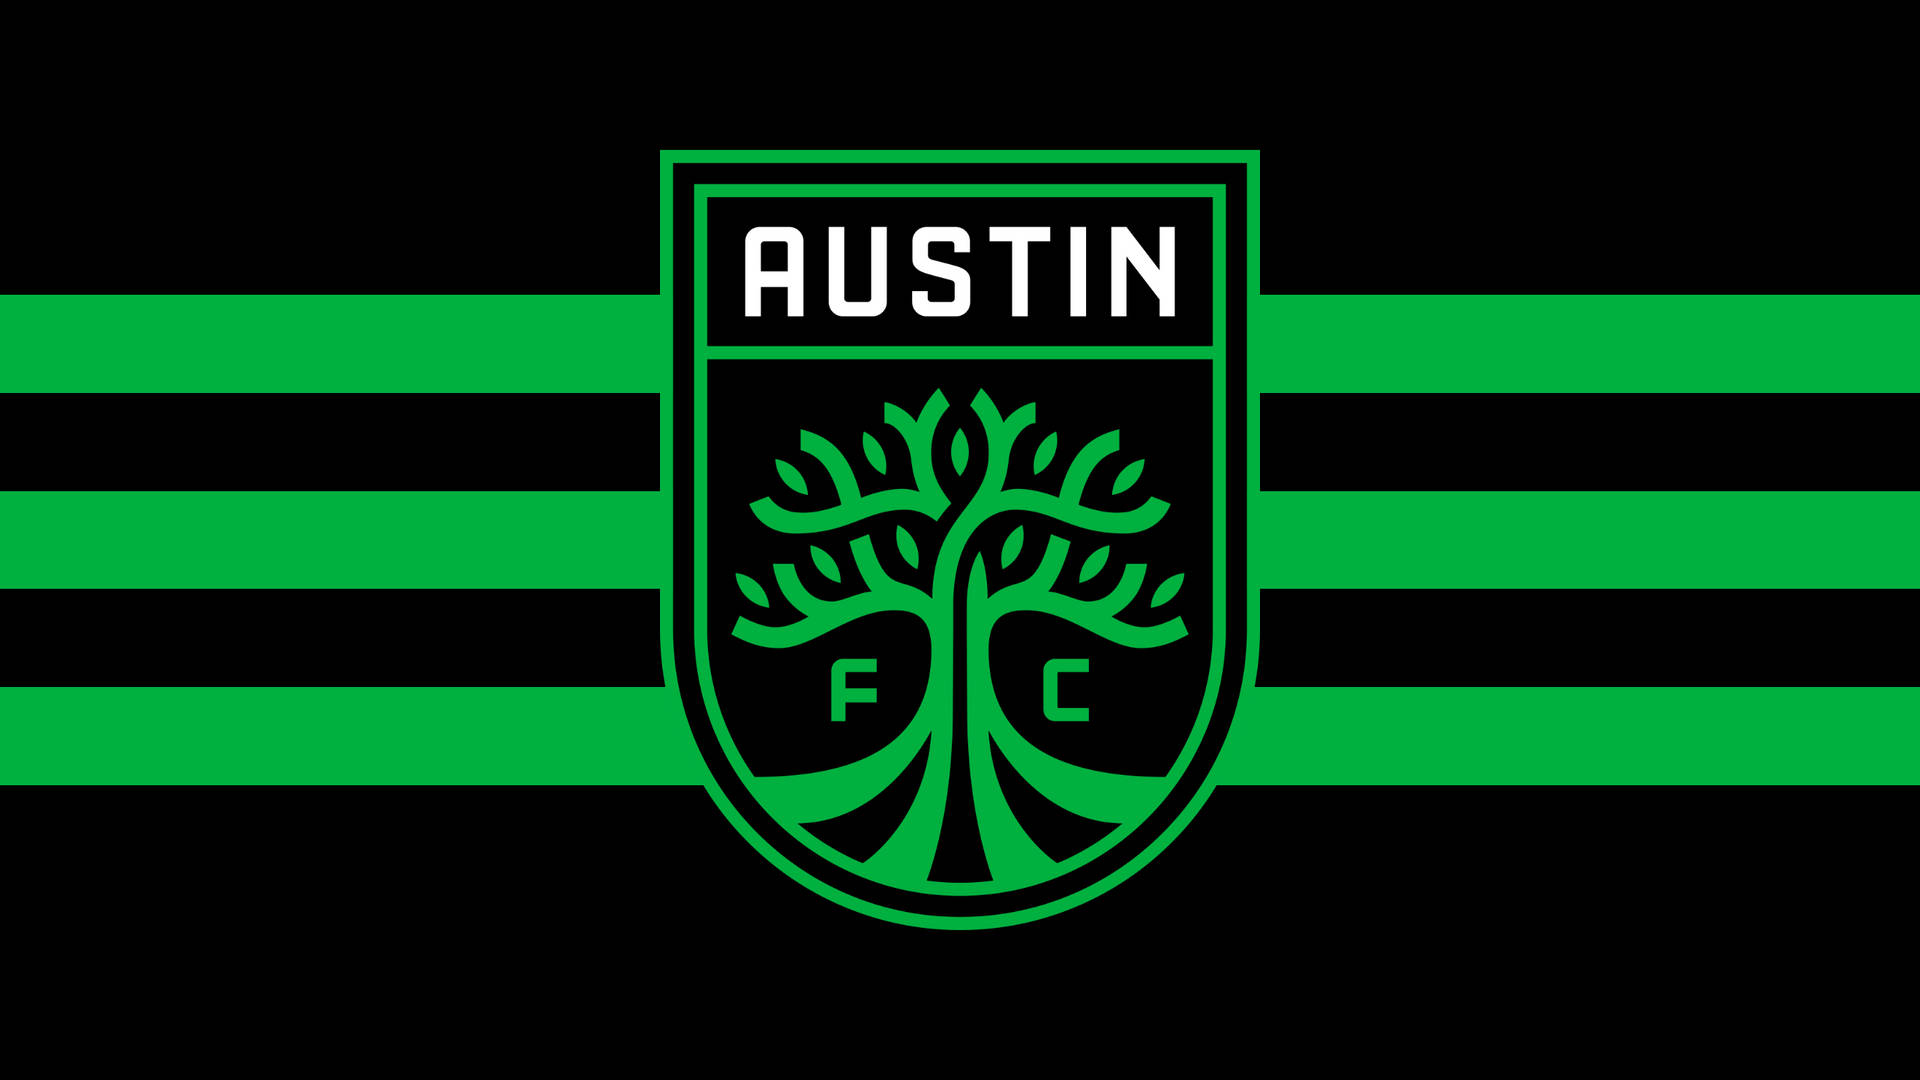 Austin Fc Soccer Club Logo Green Design Wallpaper